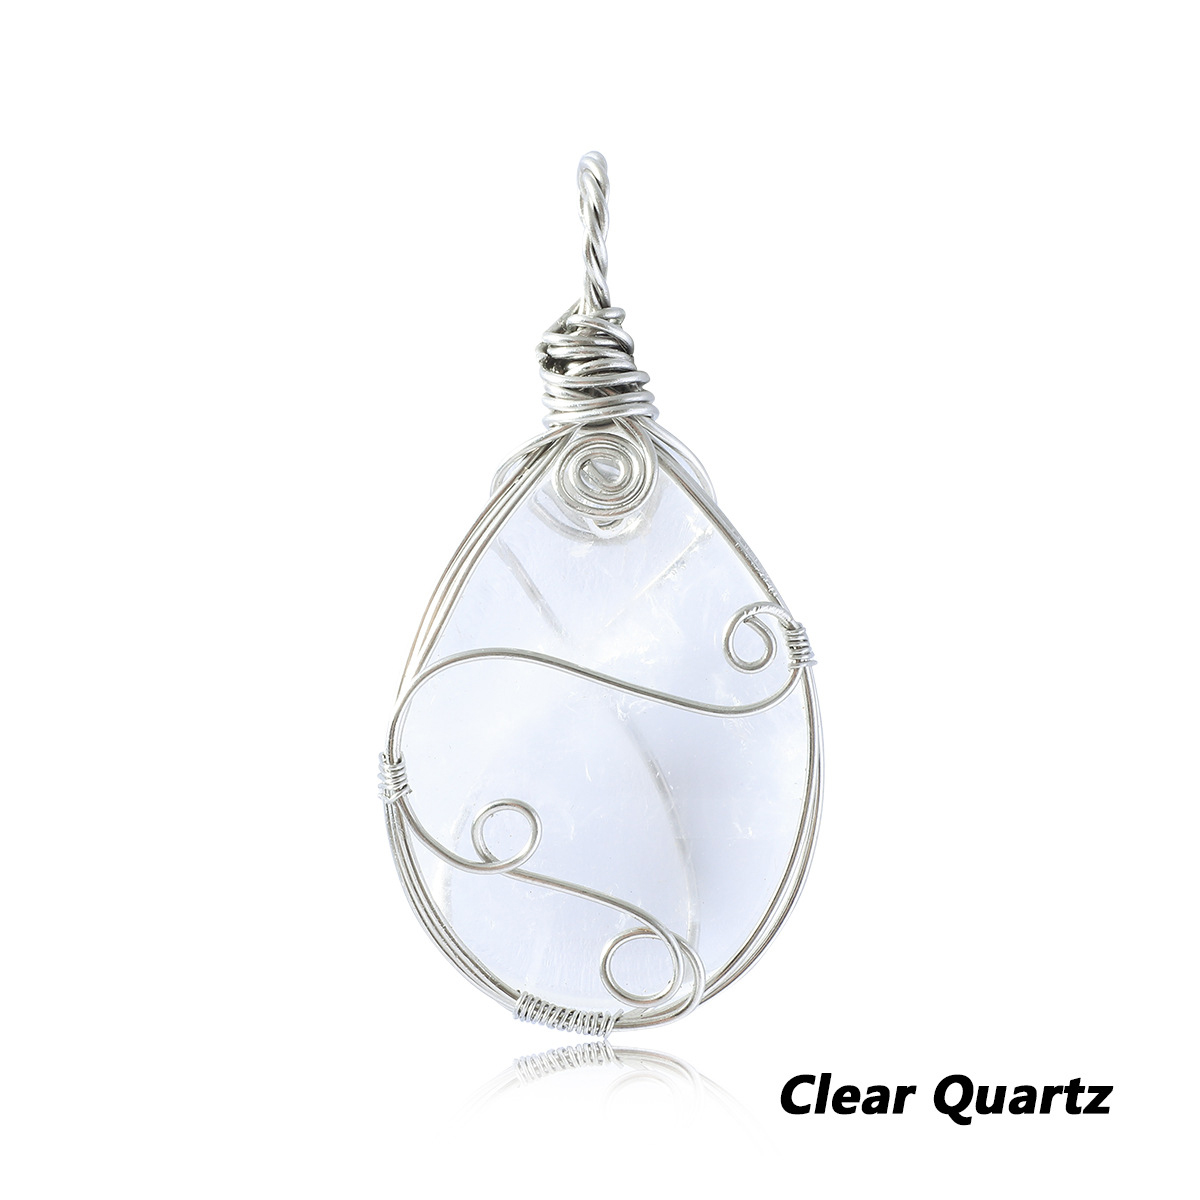 4:Clear Quartz